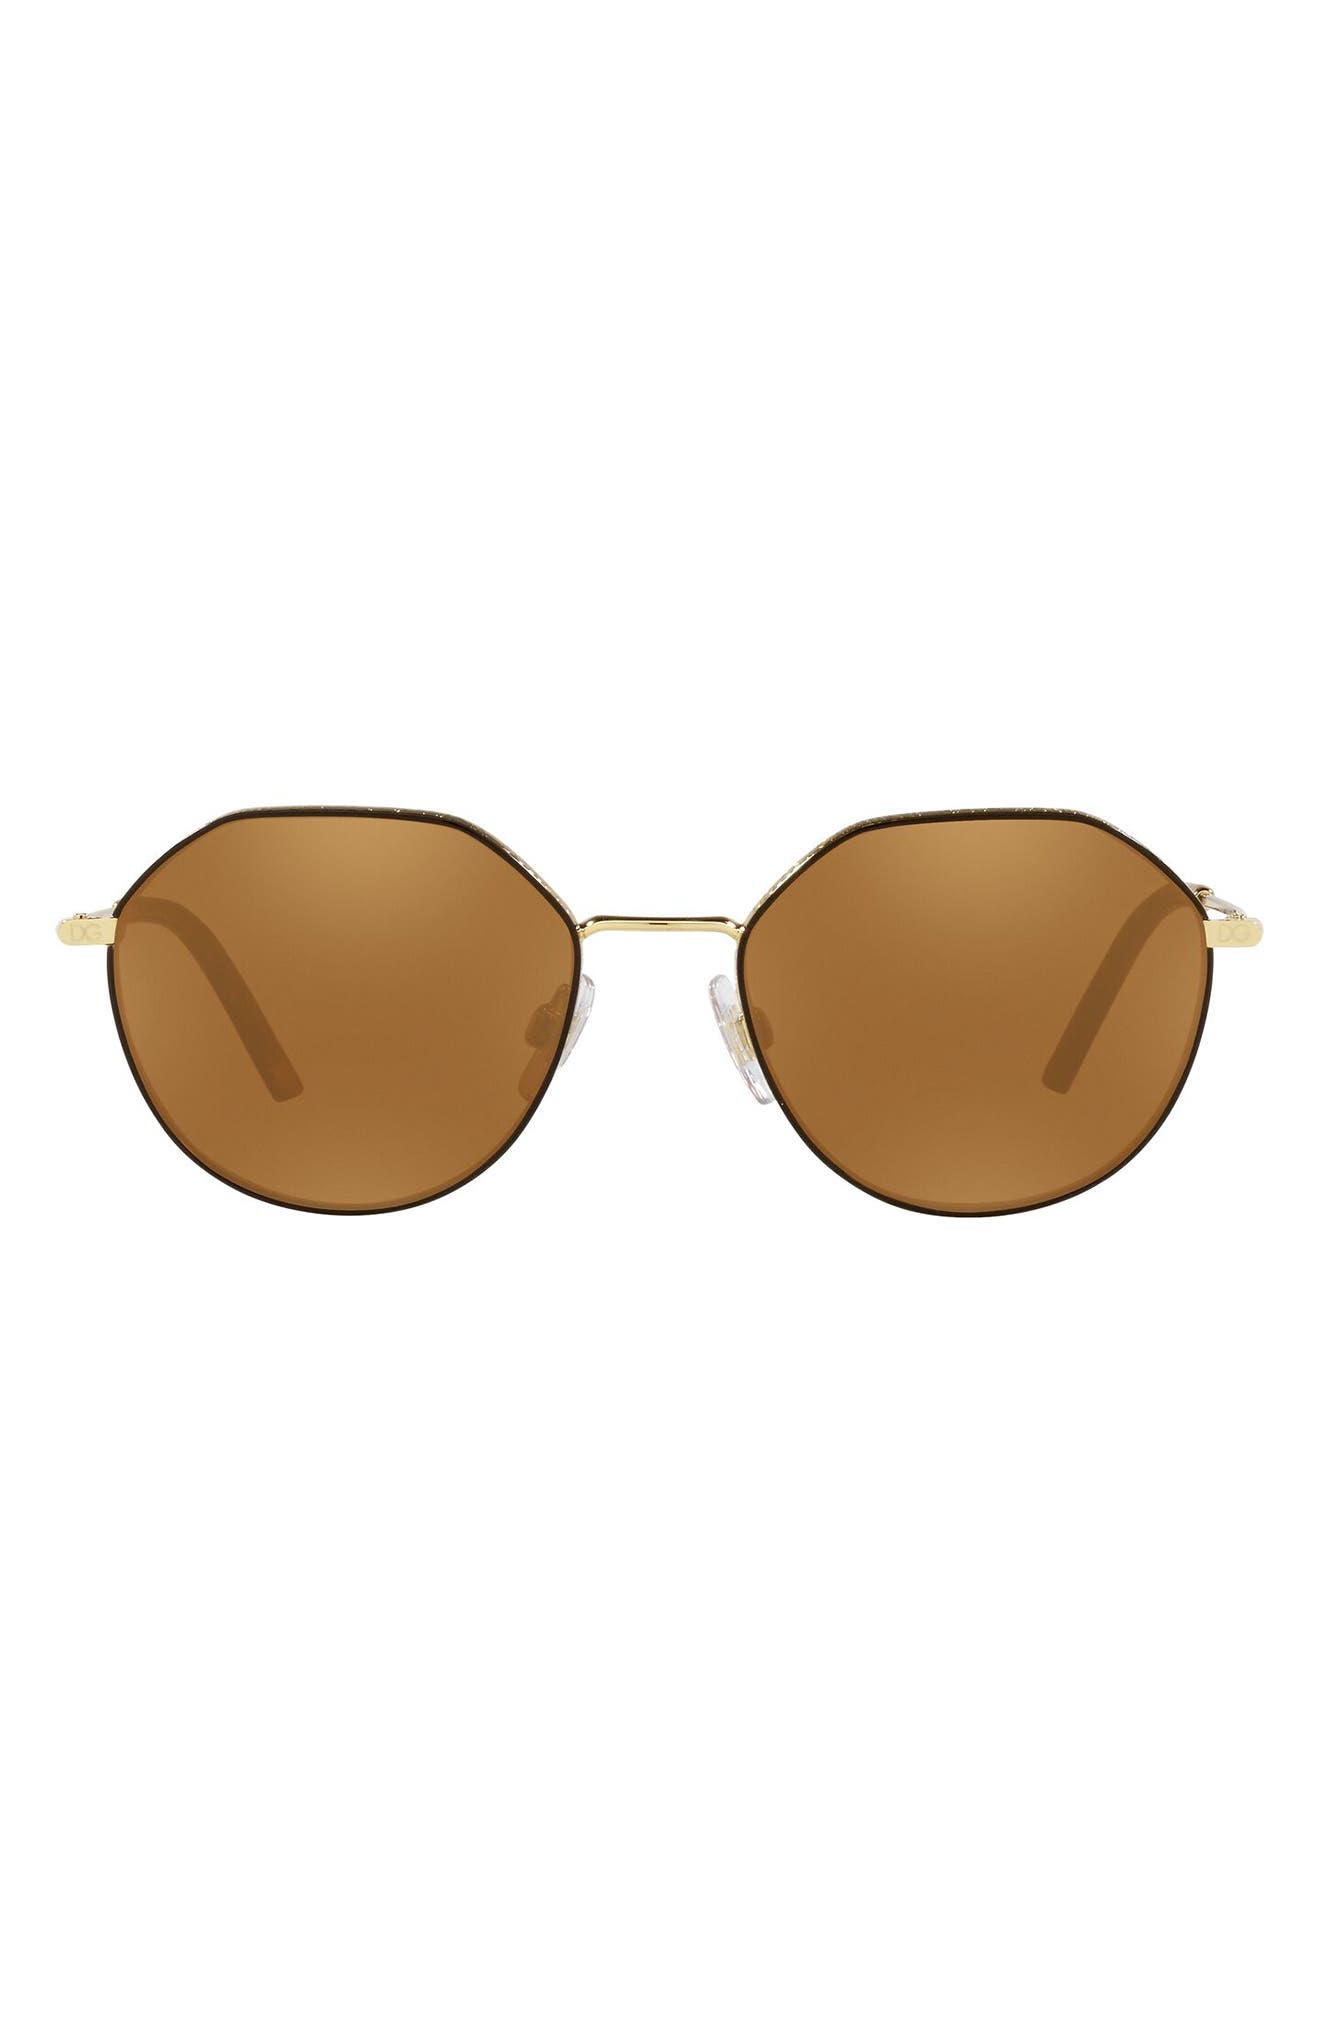 Dolce & Gabbana Phantos 54mm Round Sunglasses in Gold Brown/Brown Mirror Gold at Nordstrom